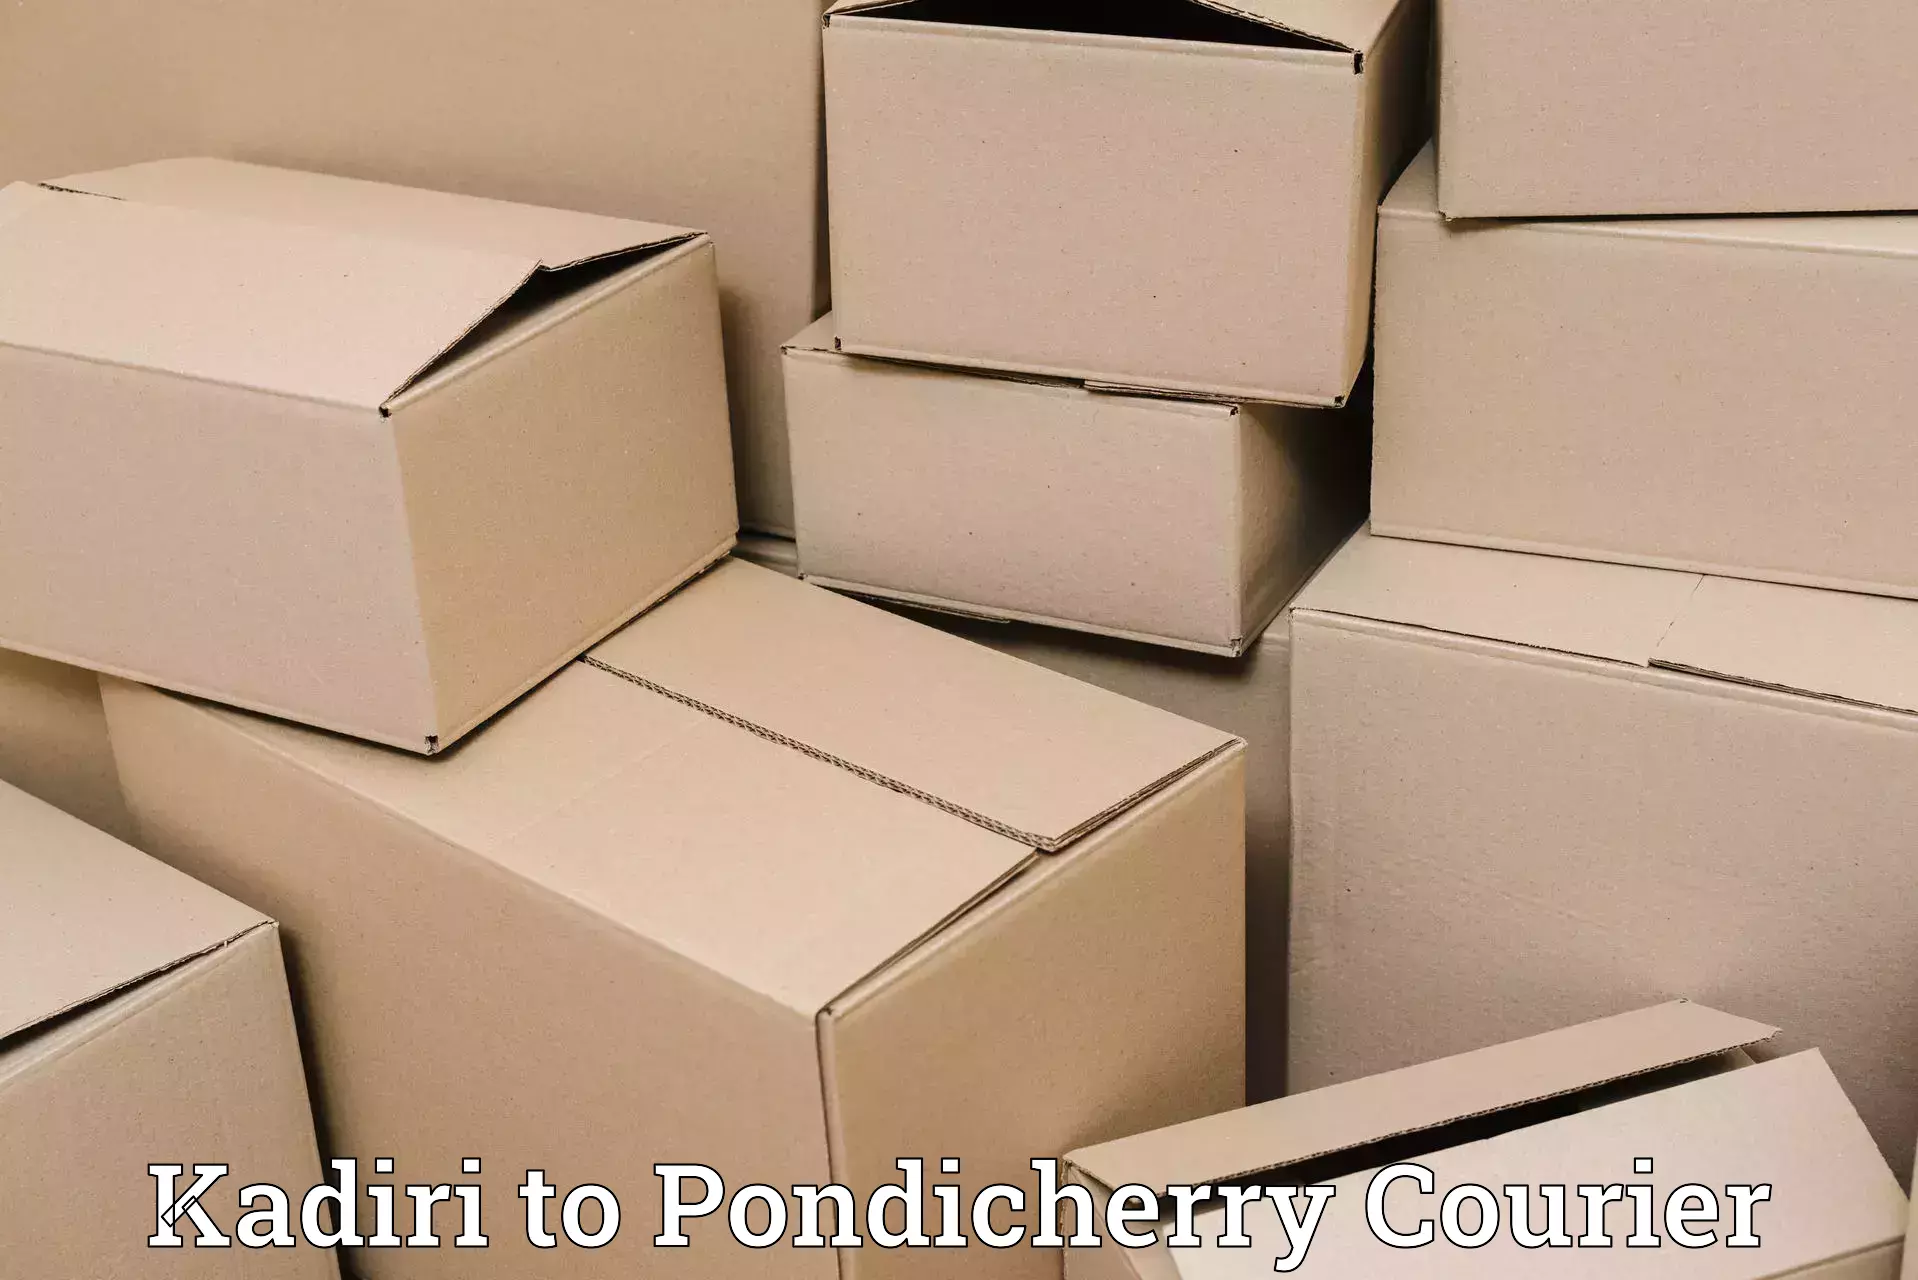 Nationwide parcel services Kadiri to Pondicherry